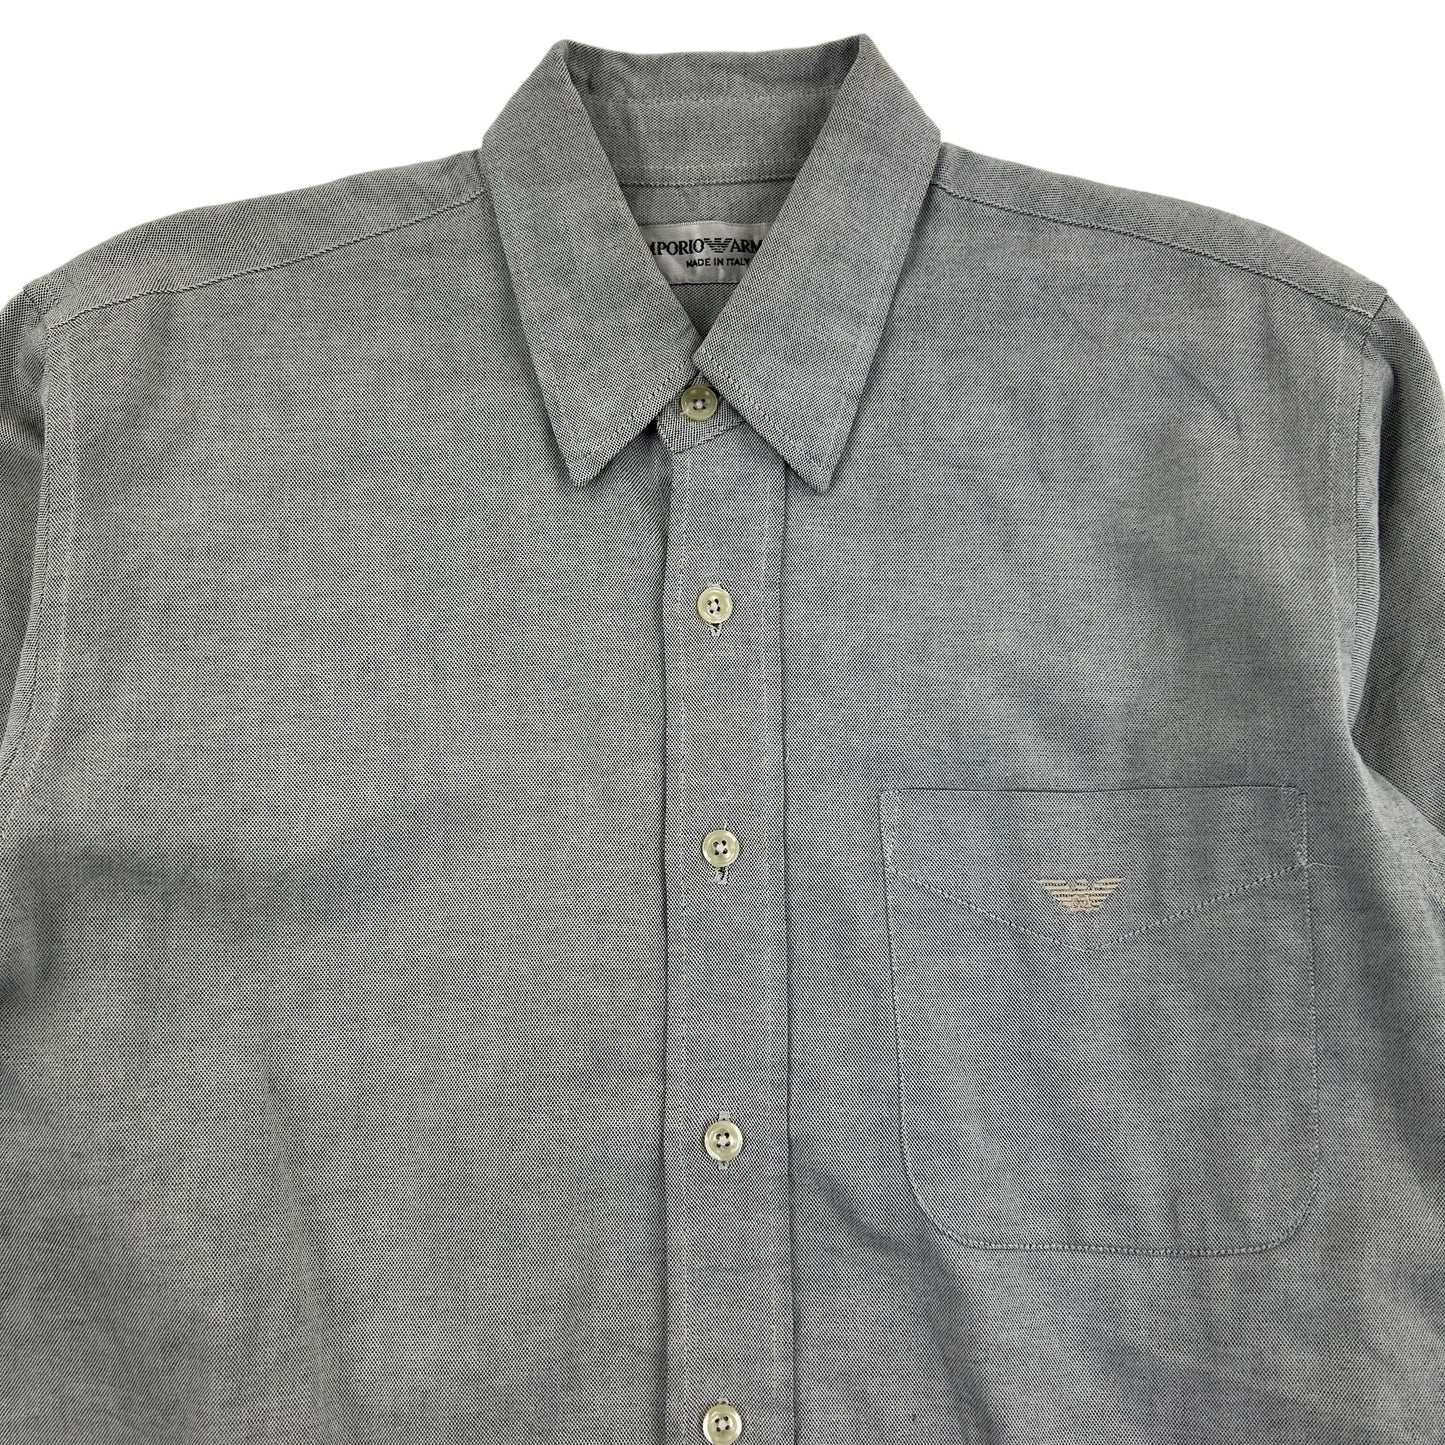 Vintage Emporio Armani Shirt Size M